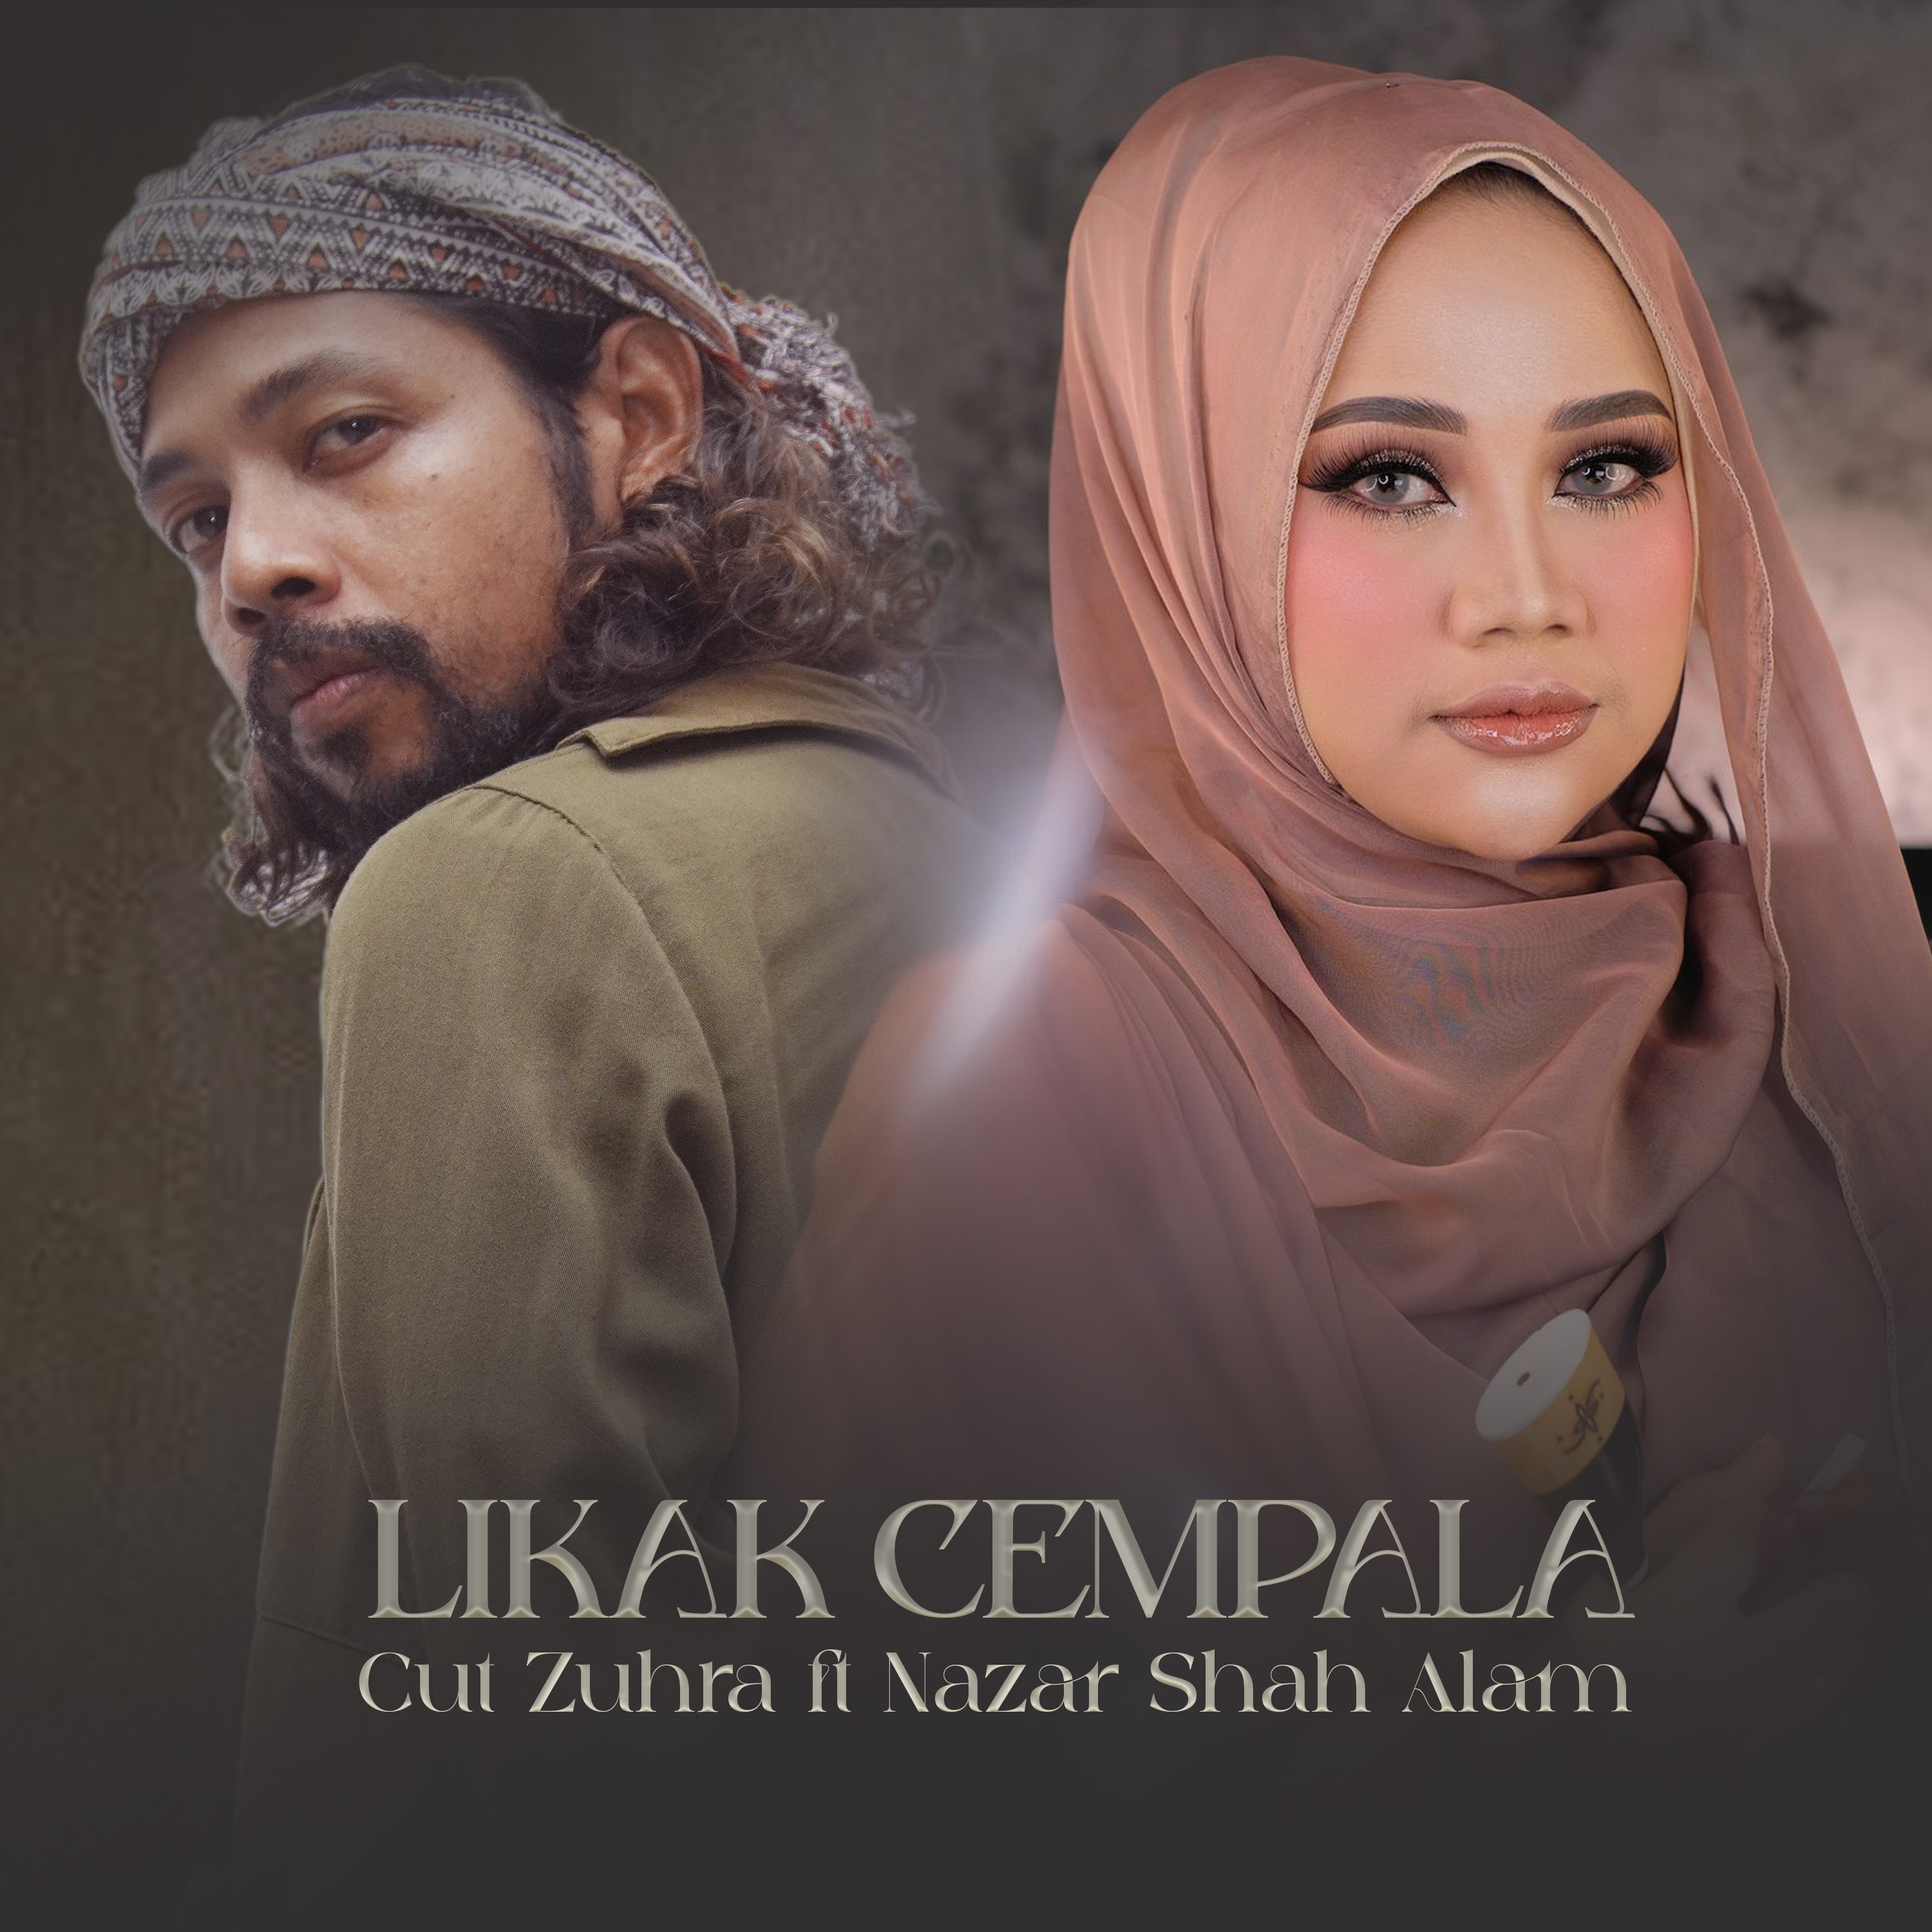 Likak Cempala - Cut Zuhra ft. Nazar Shah Alam